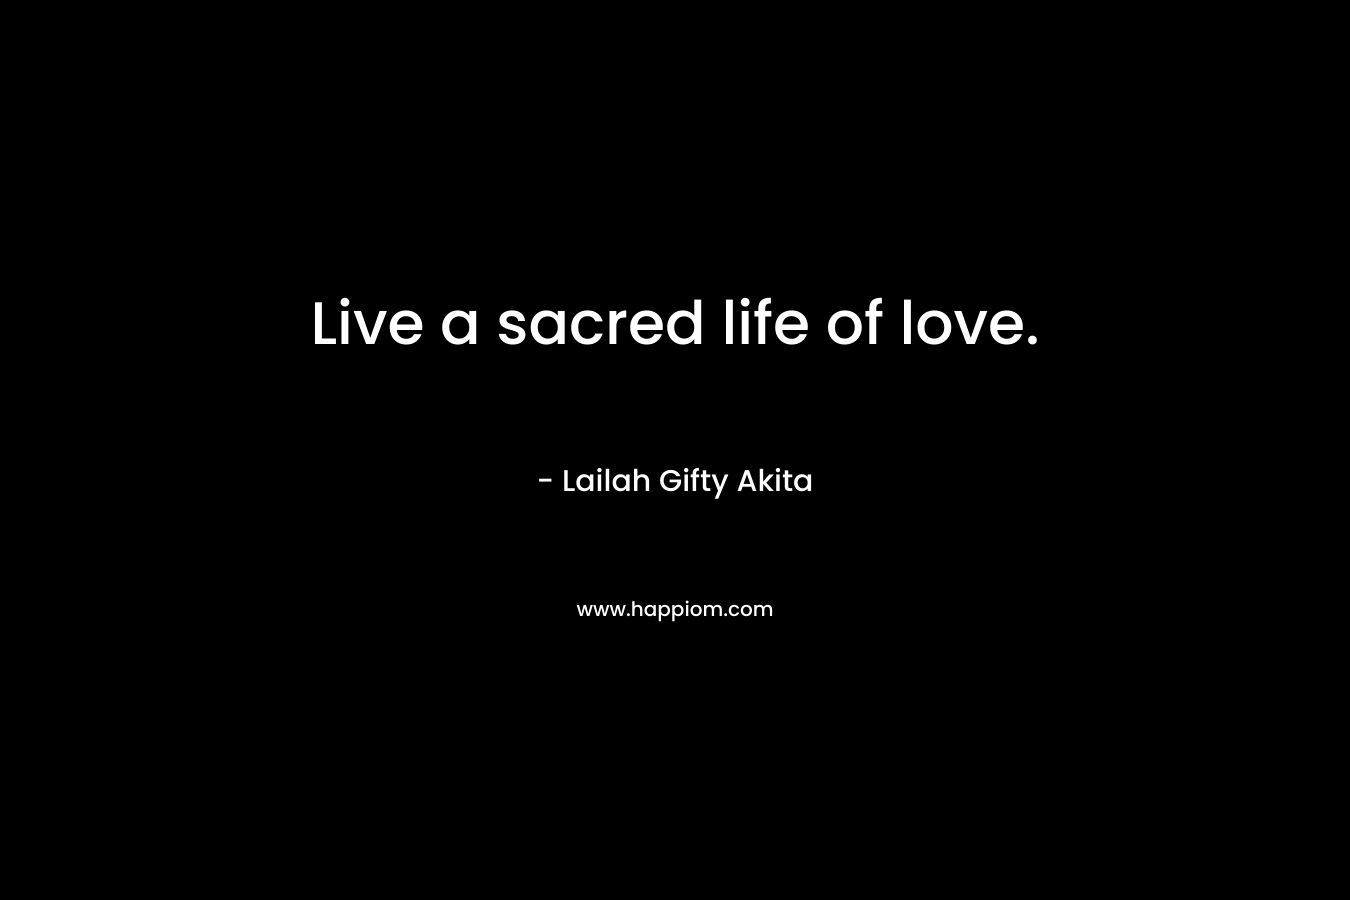 Live a sacred life of love.